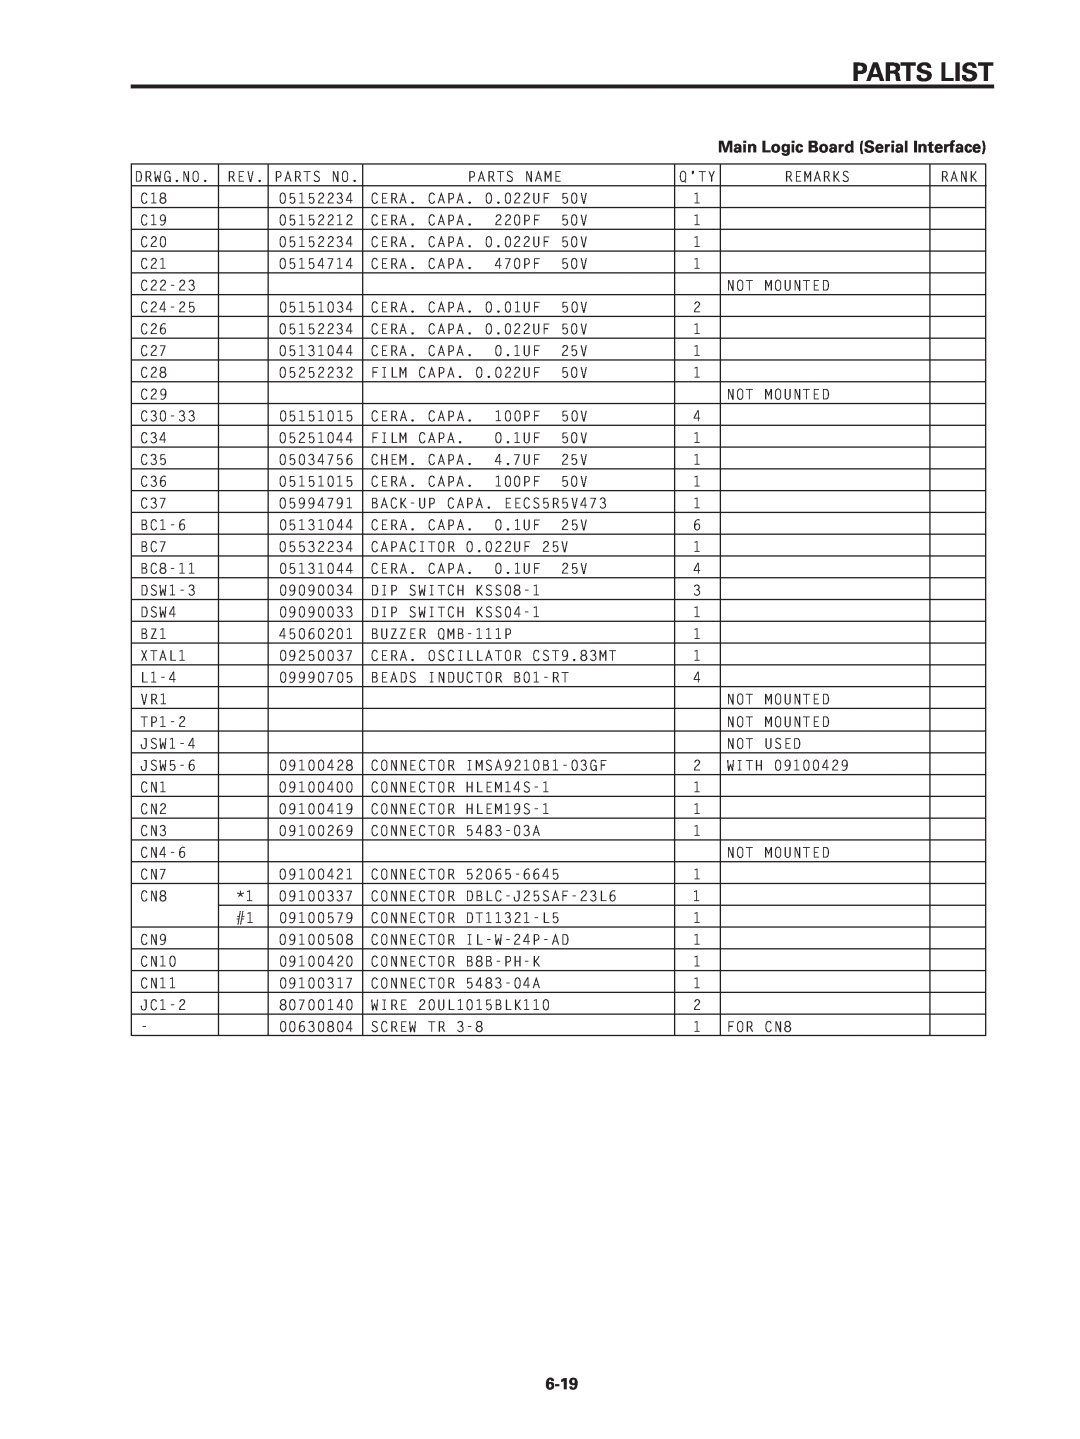 Star Micronics SP320S technical manual Parts List, Main Logic Board Serial Interface, 6-19 